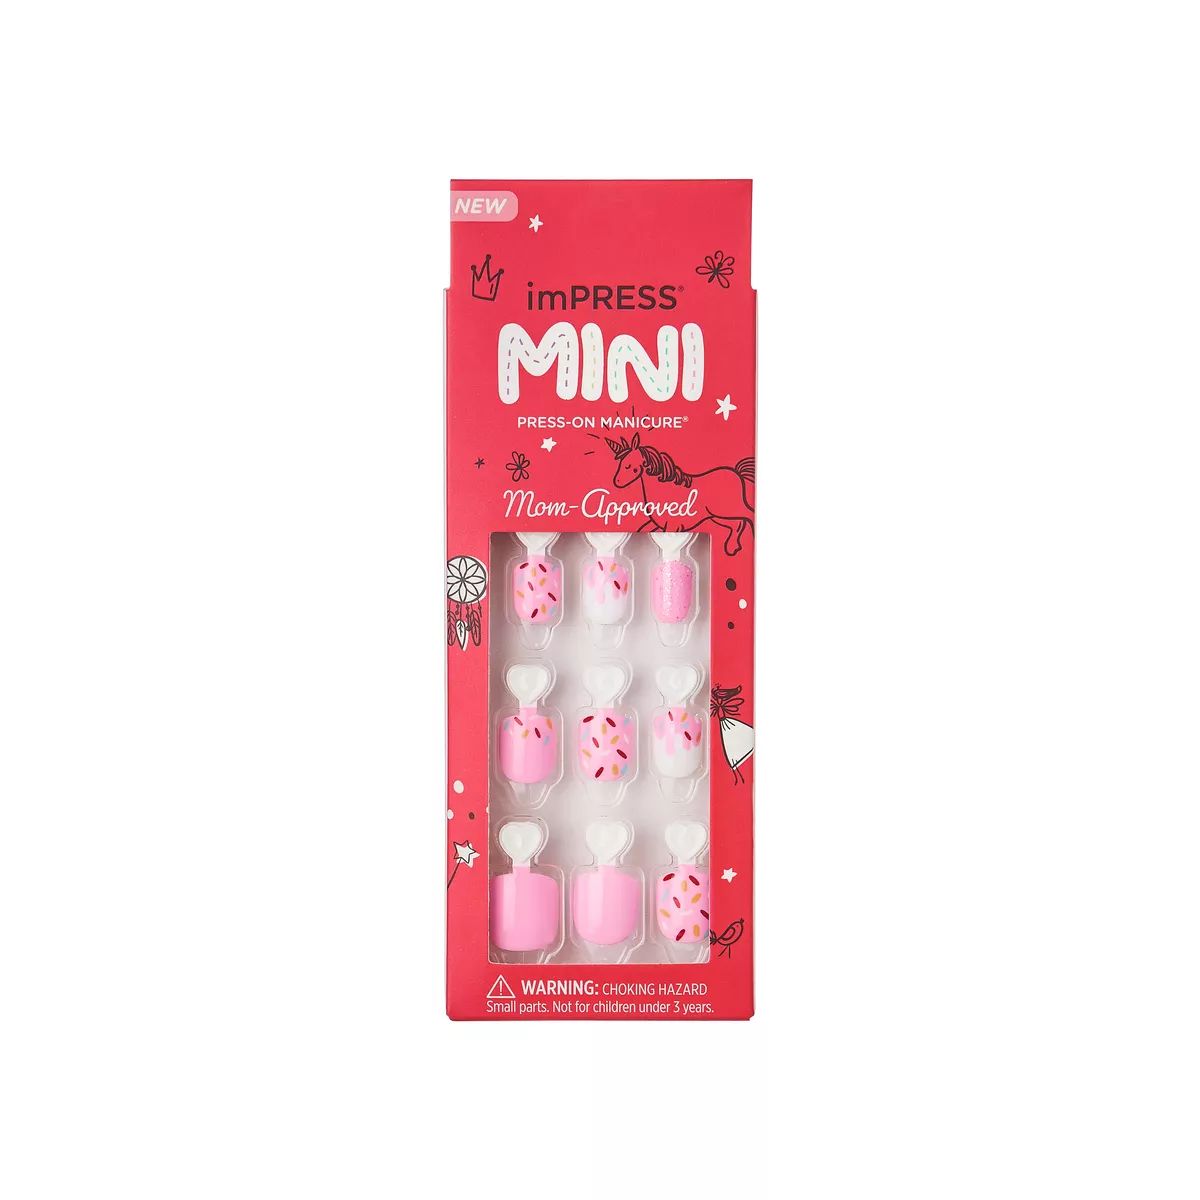 imPRESS Press-On Manicure Mini Press-On Nails for Kids - Super Duper - 21ct | Target